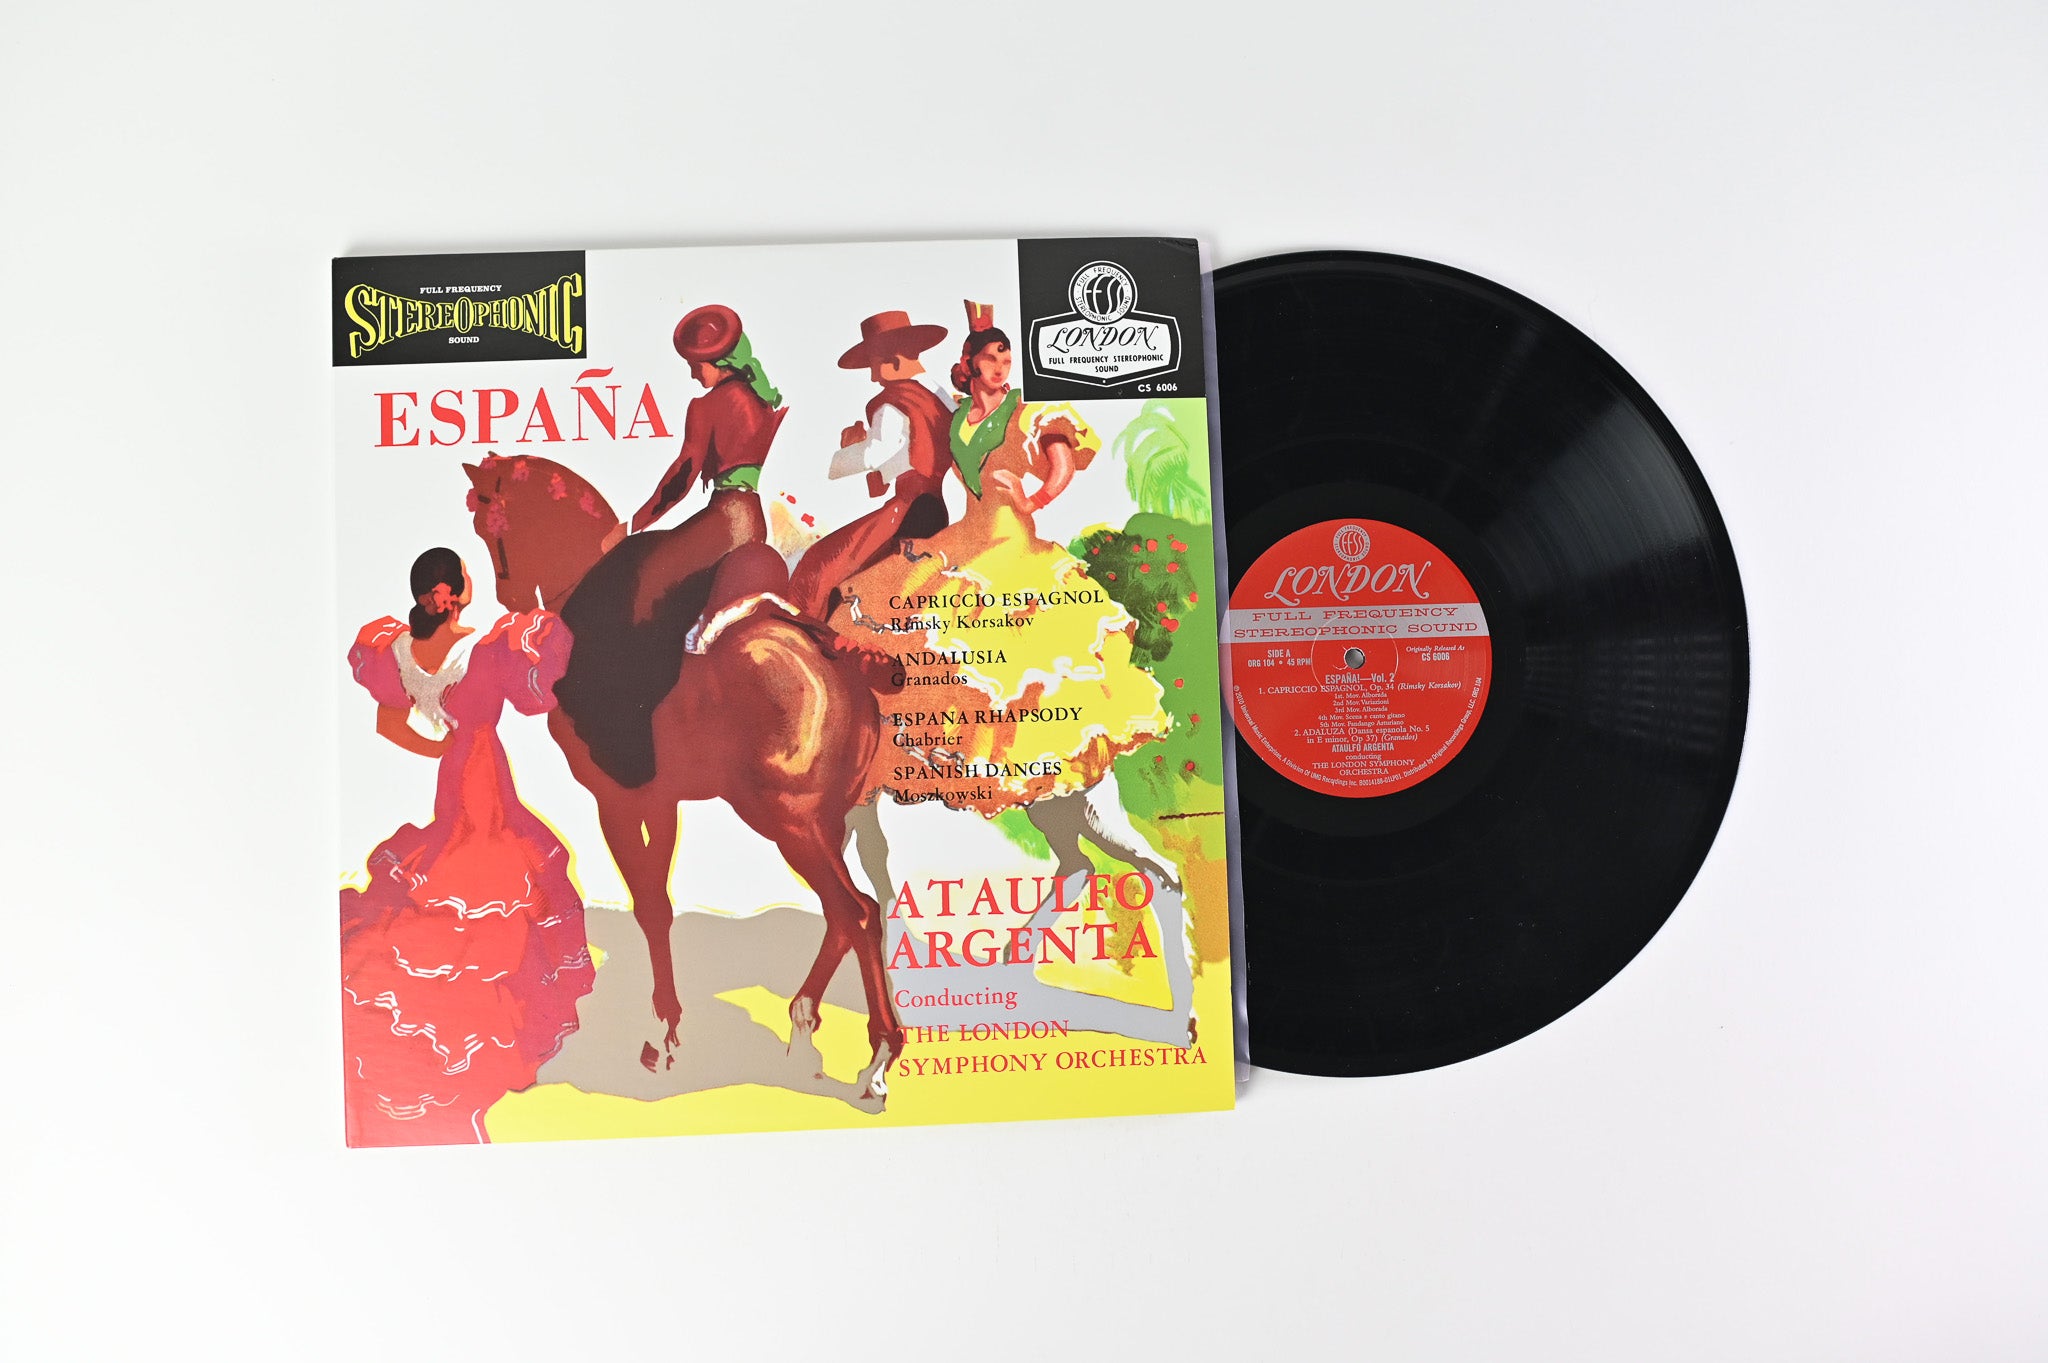 Nikolai Rimsky-Korsakov - España on ORG Reissue 45 RPM